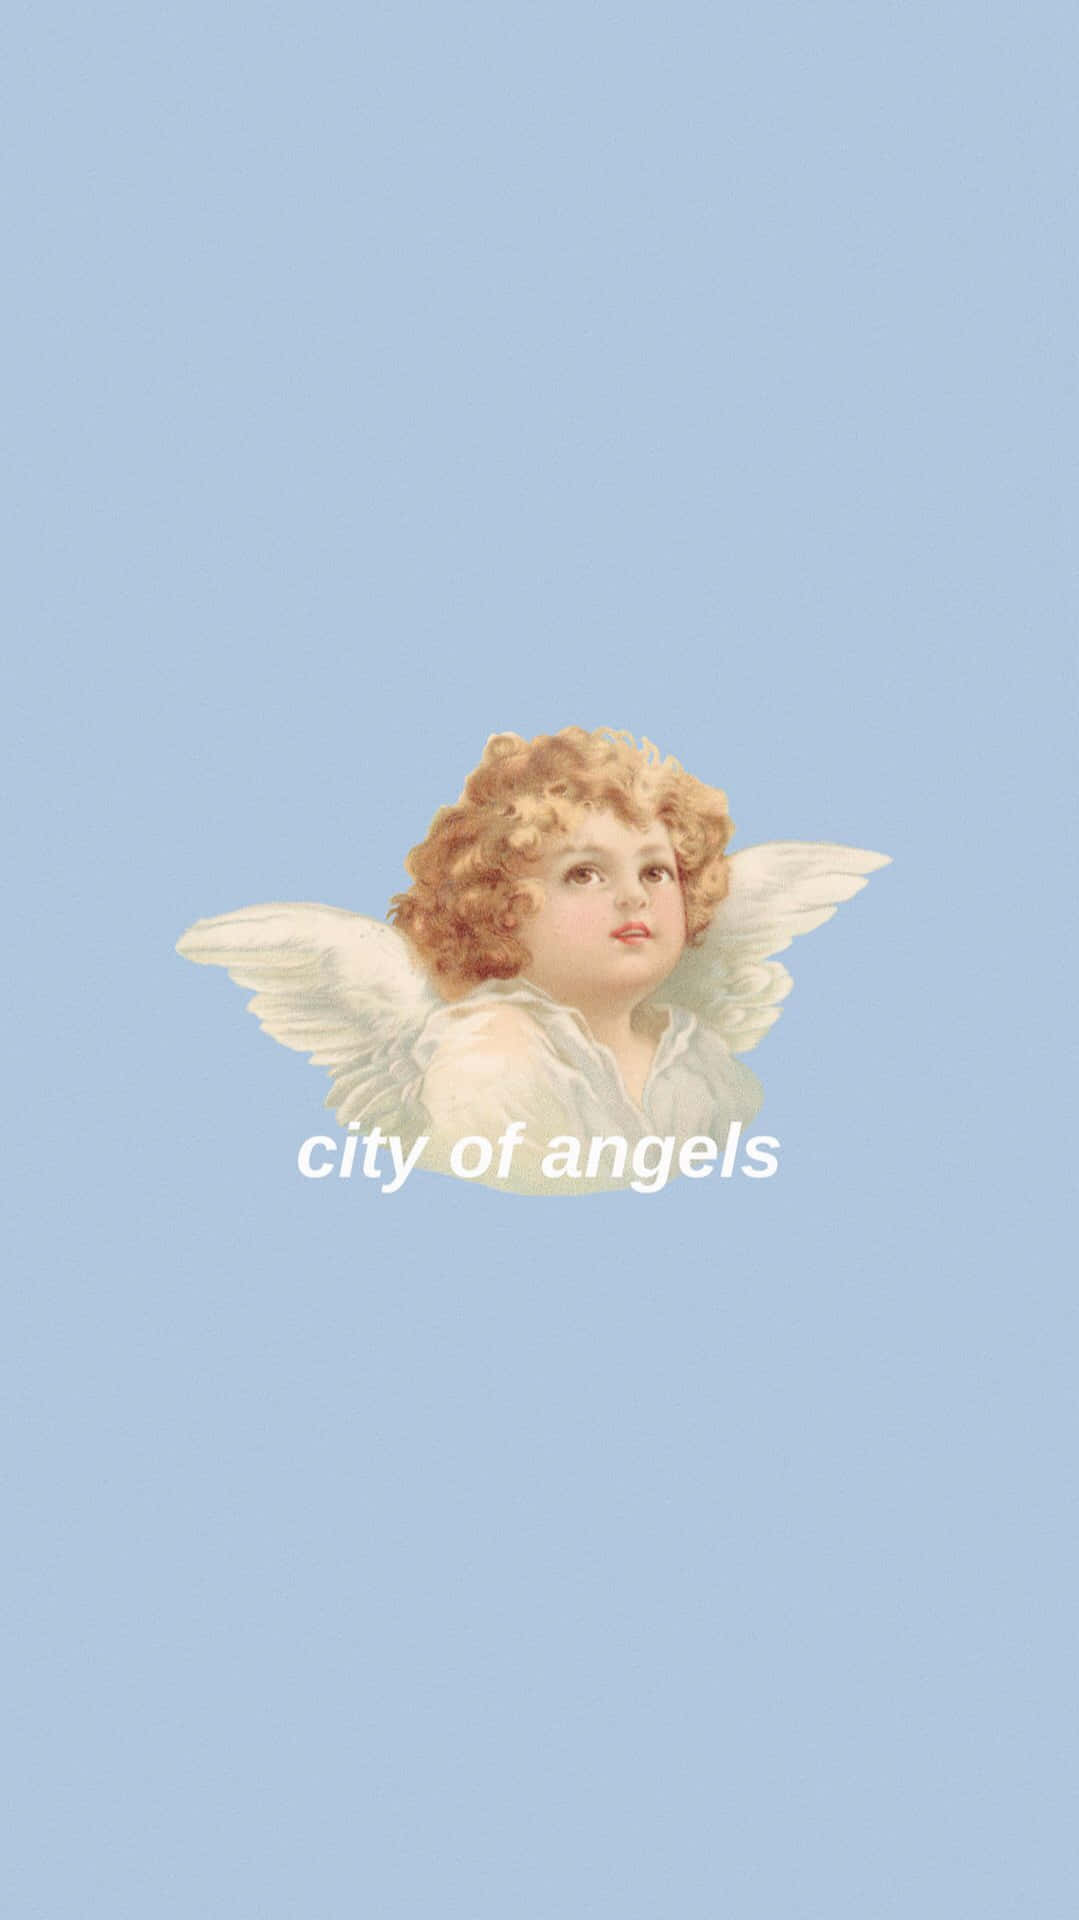 Free Aesthetic Angel Wallpaper Downloads, Aesthetic Angel Wallpaper for FREE